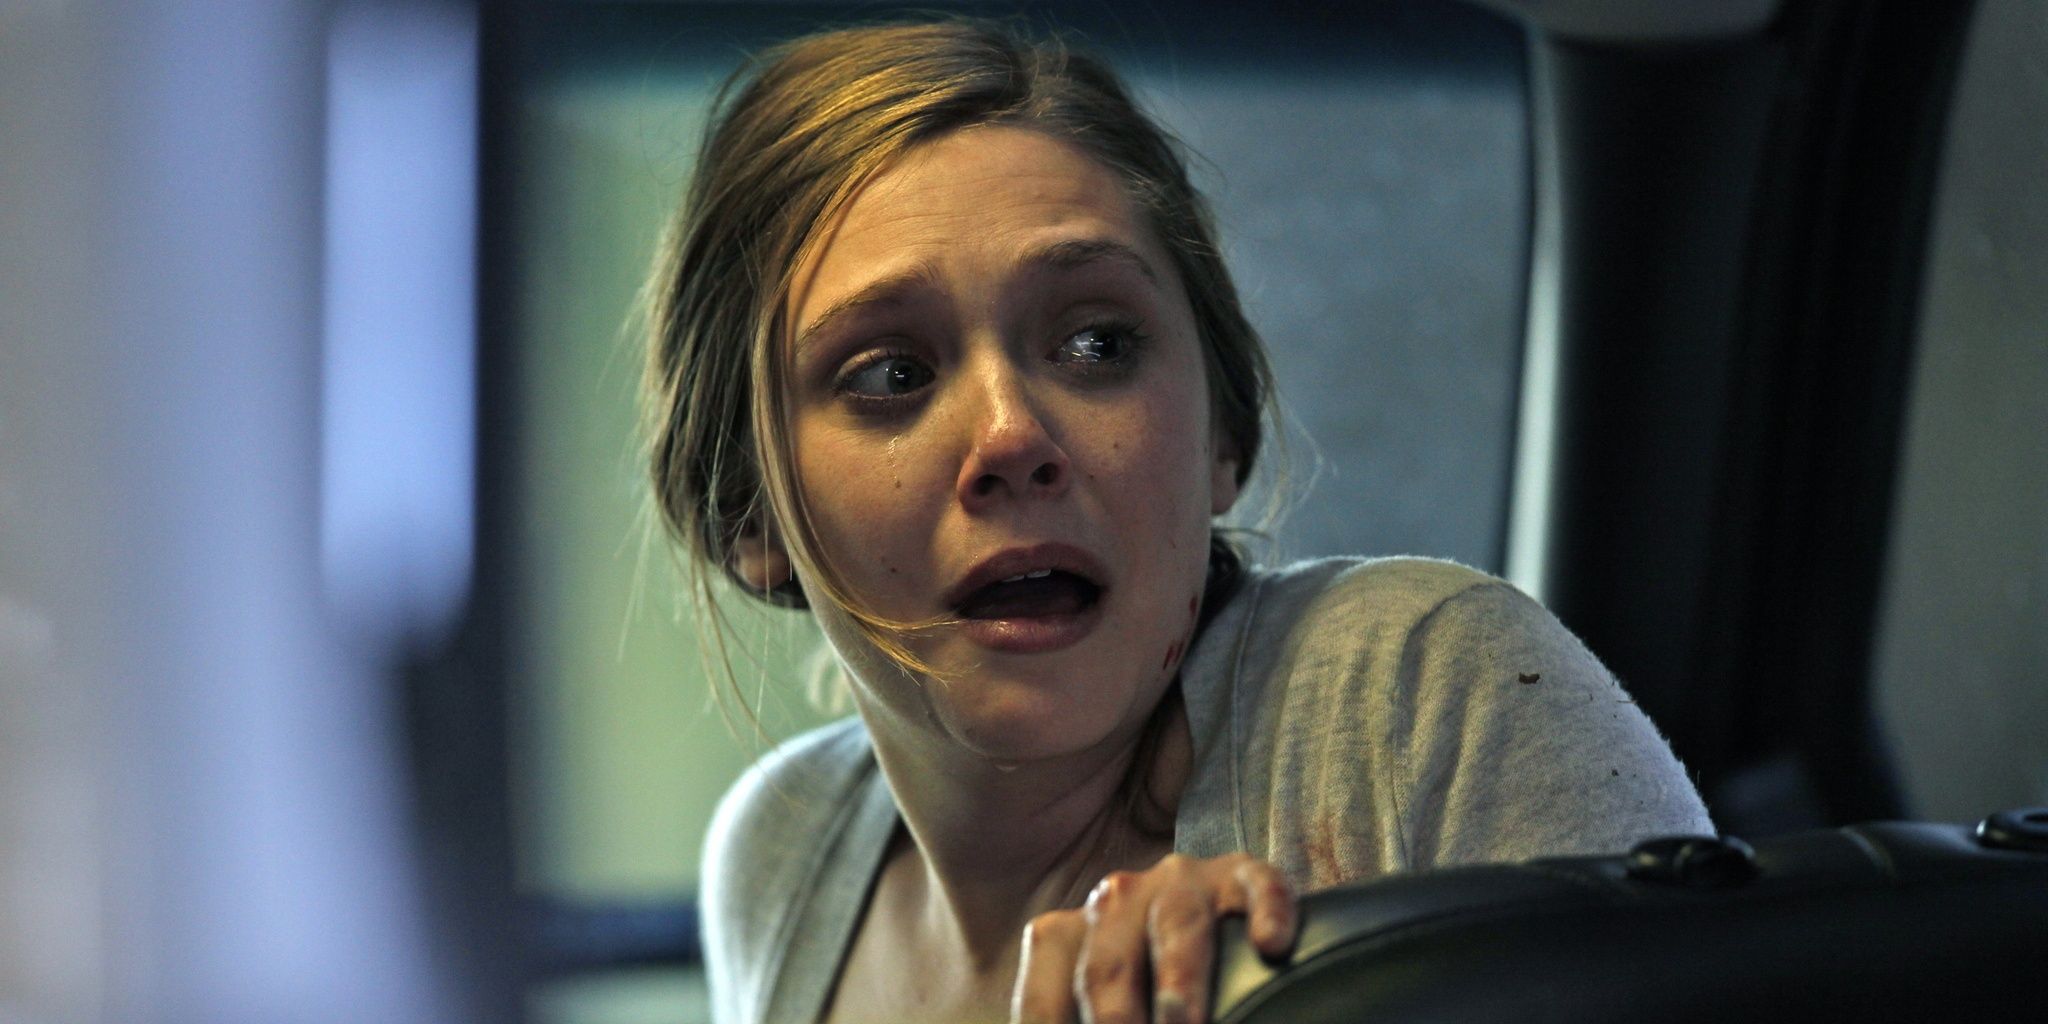 Elizabeth Olsen scared in a movie